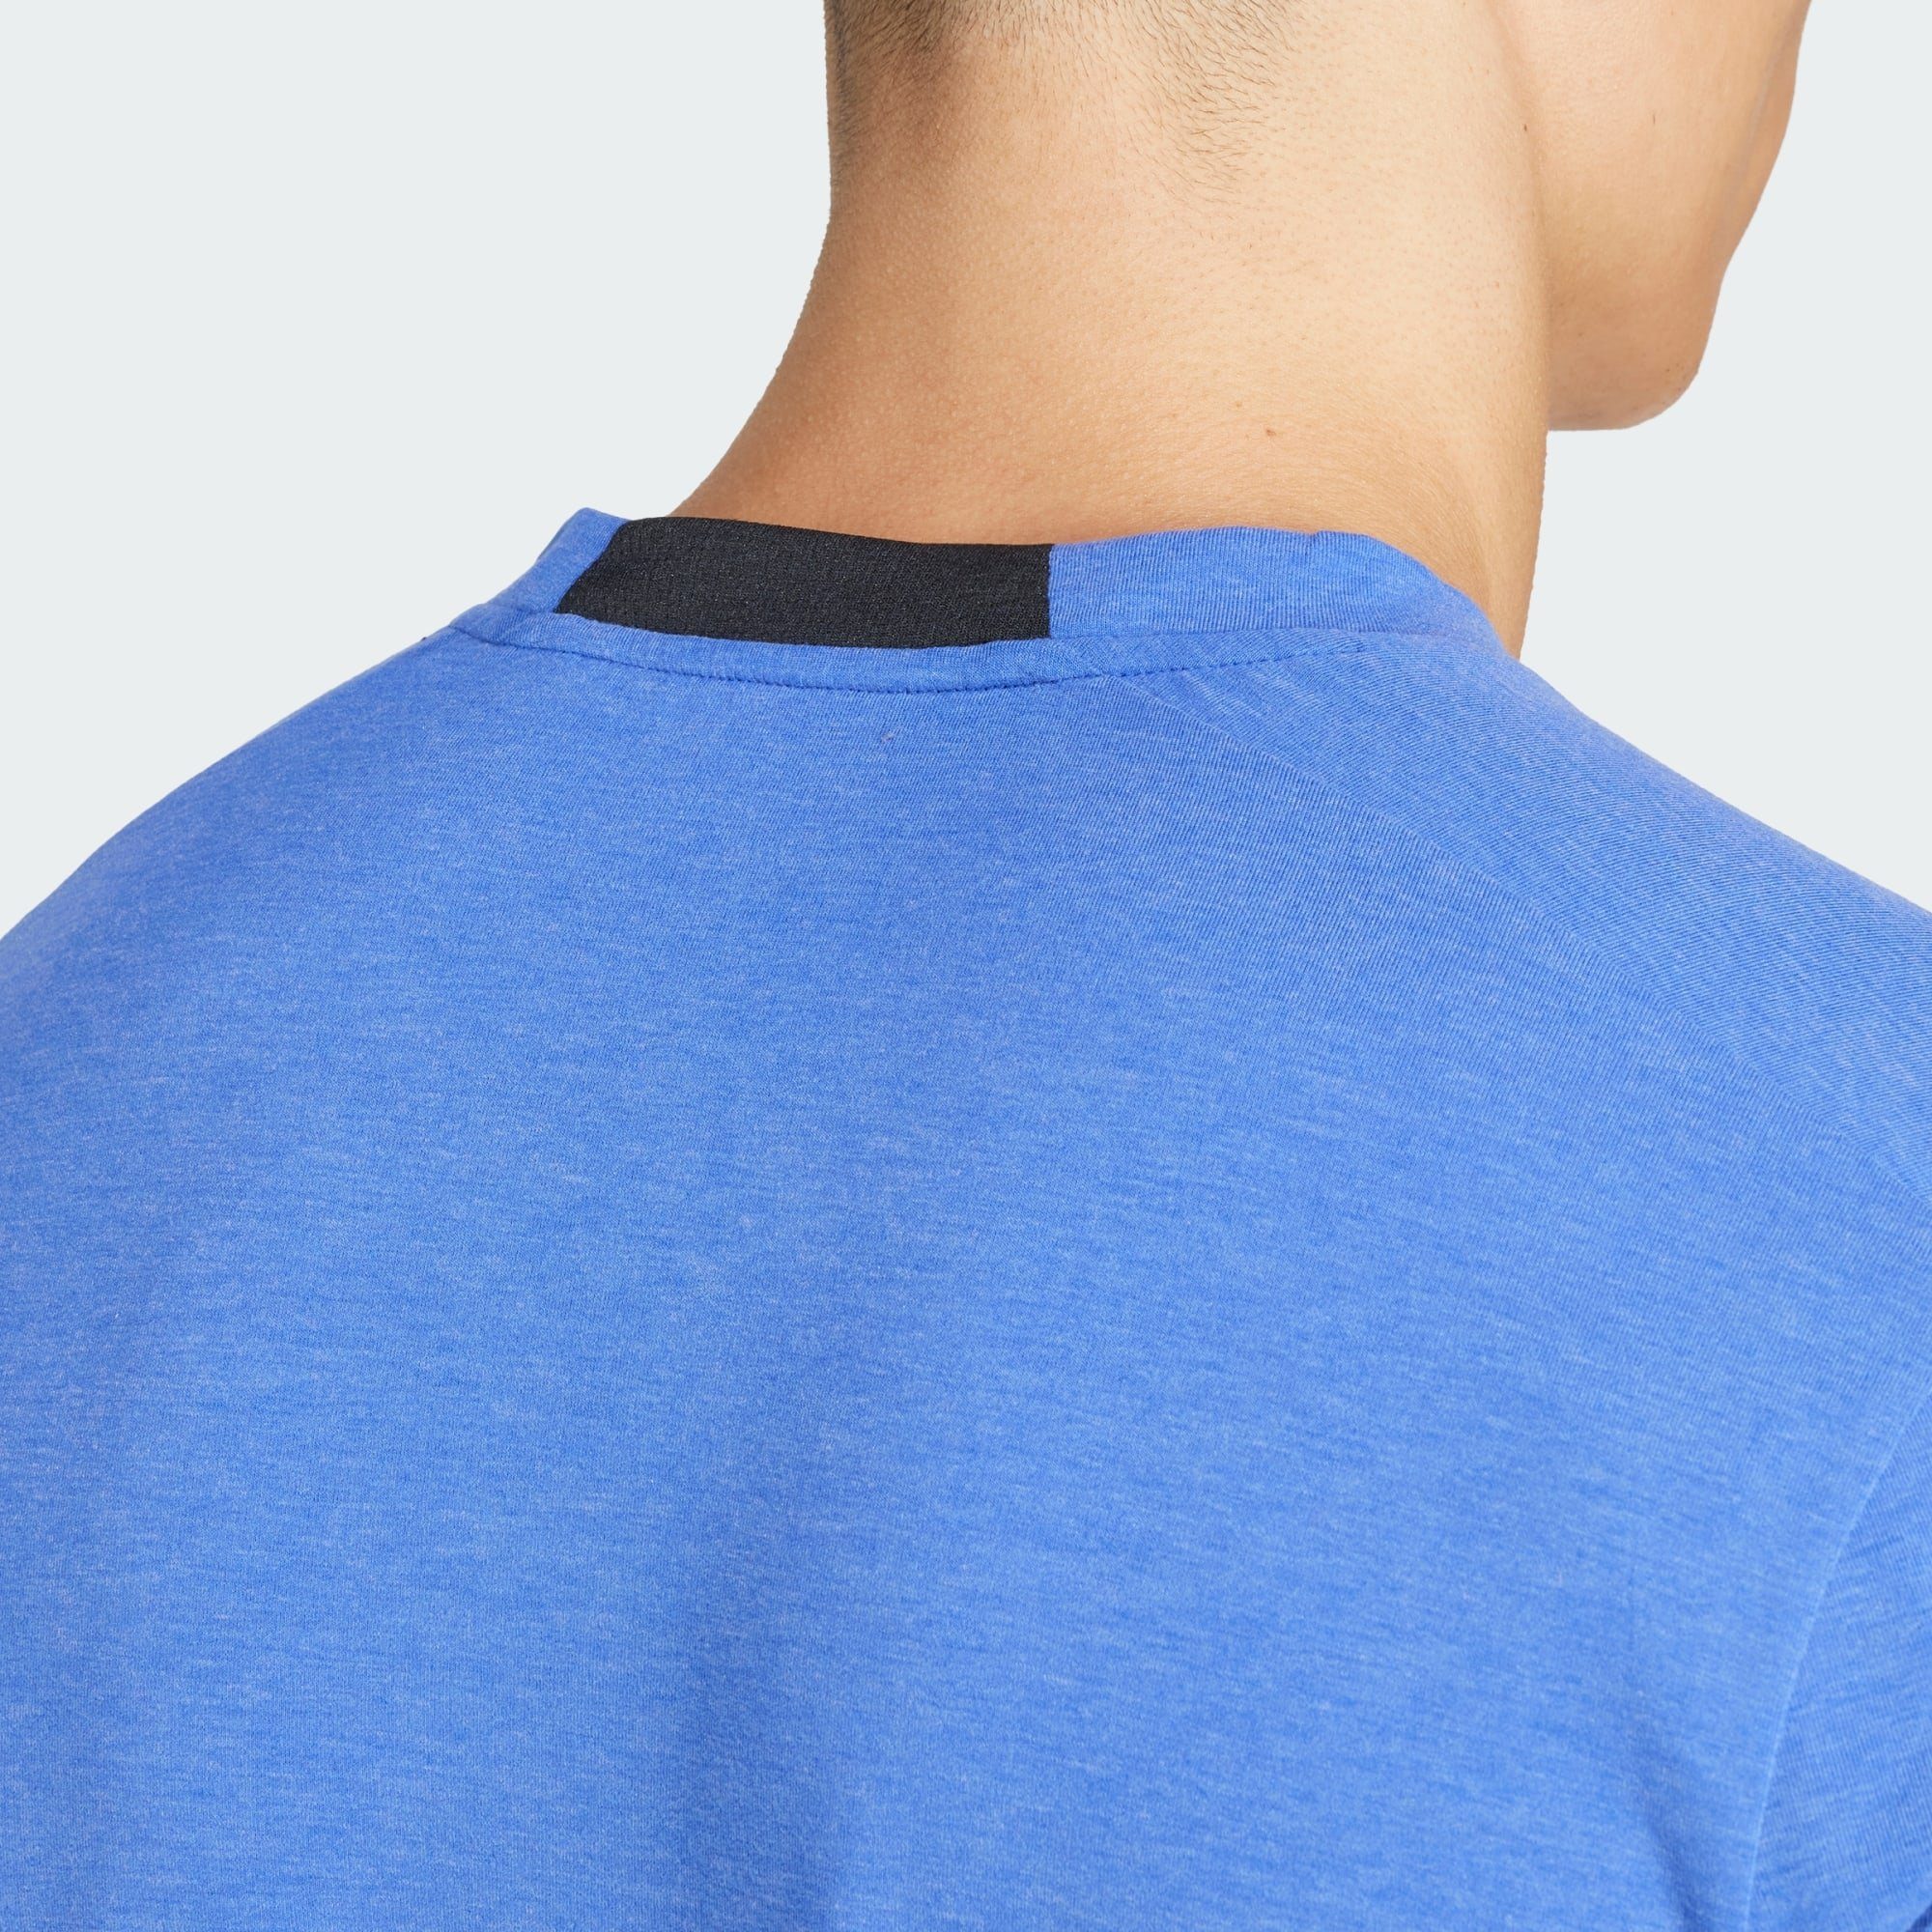 T-SHIRT Funktionsshirt FOR Lucid WORKOUT Blue Performance TRAINING Semi DESIGNED adidas